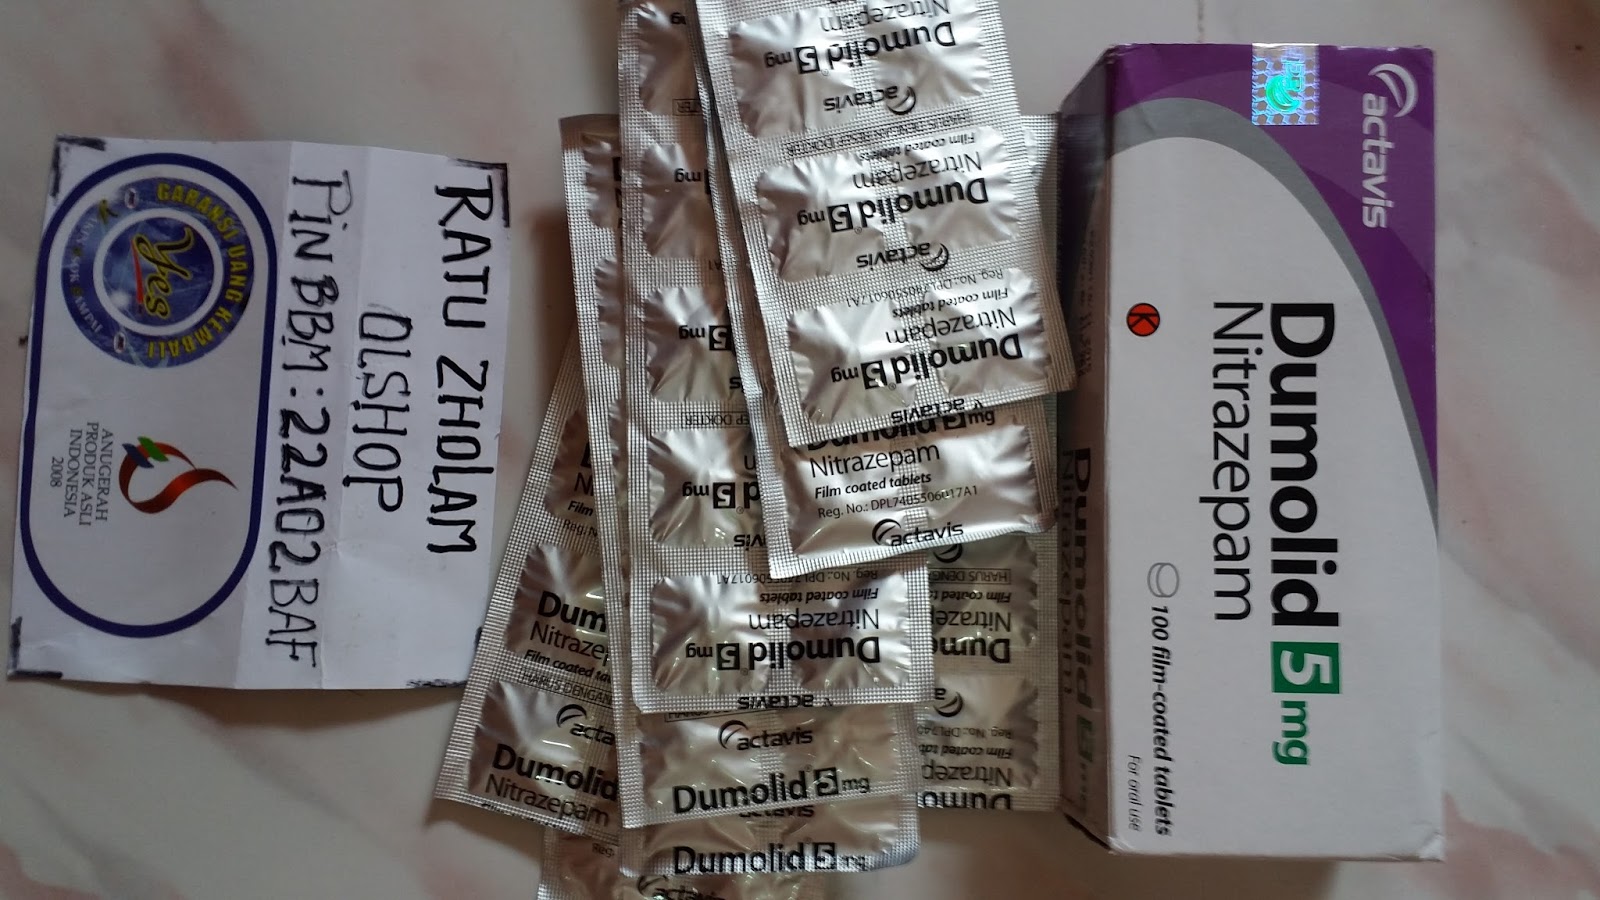 Ketoconazole and beclomethasone dipropionate cream price